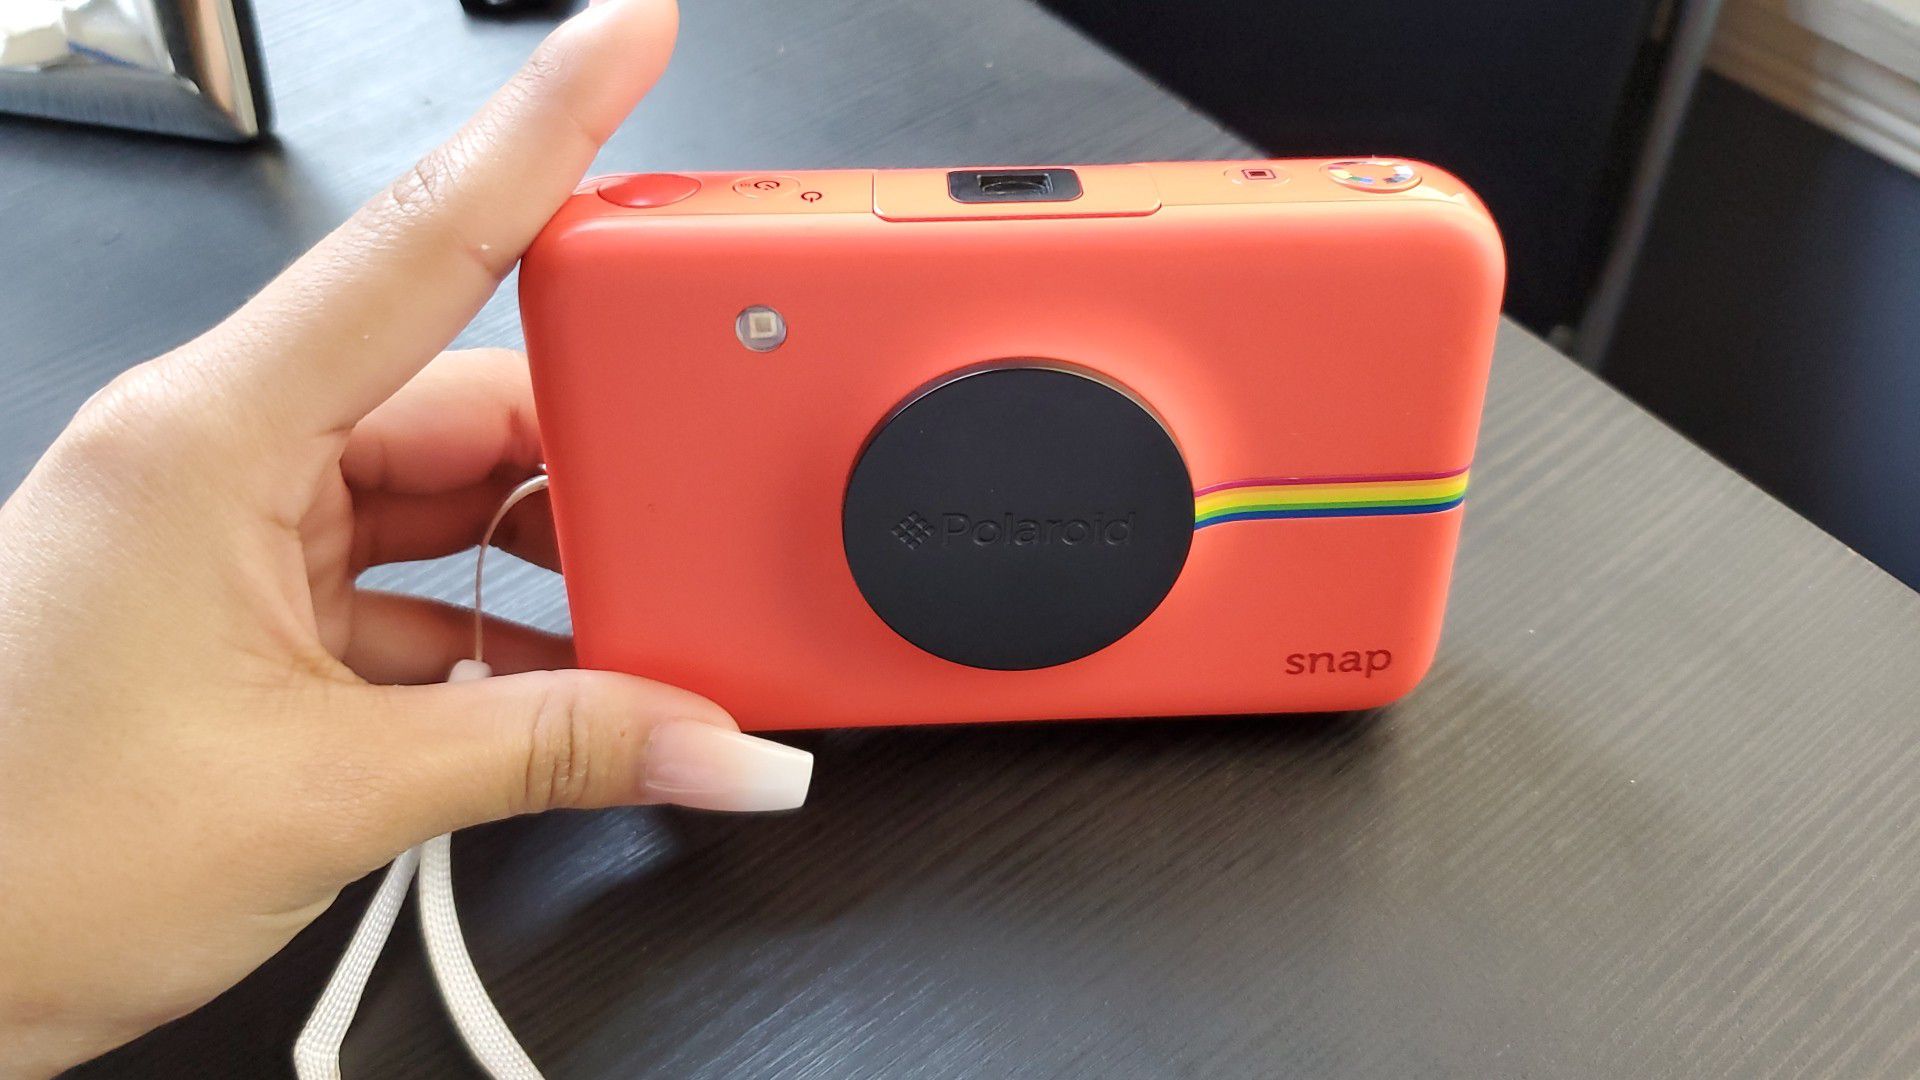 Polaroid Snap Touch Instant Digital Camera